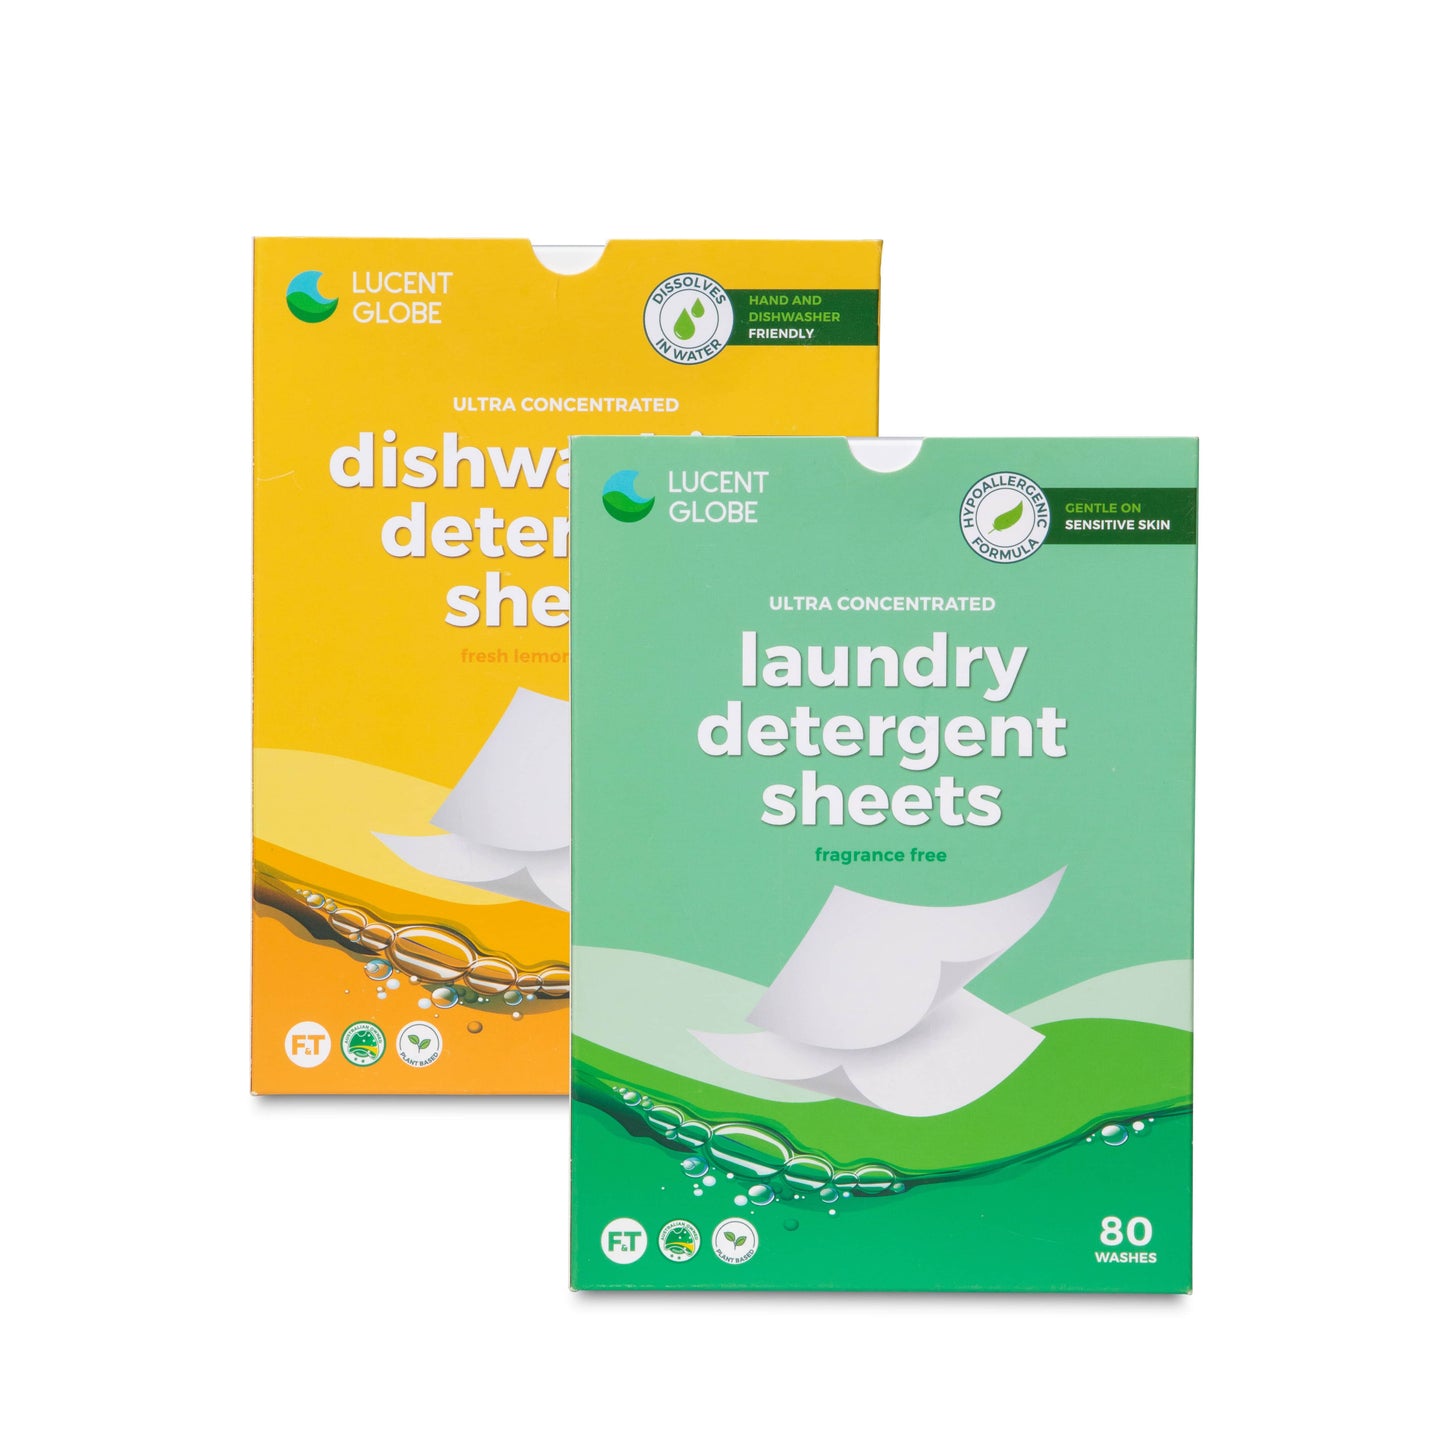 Detergent Sheet Bundle